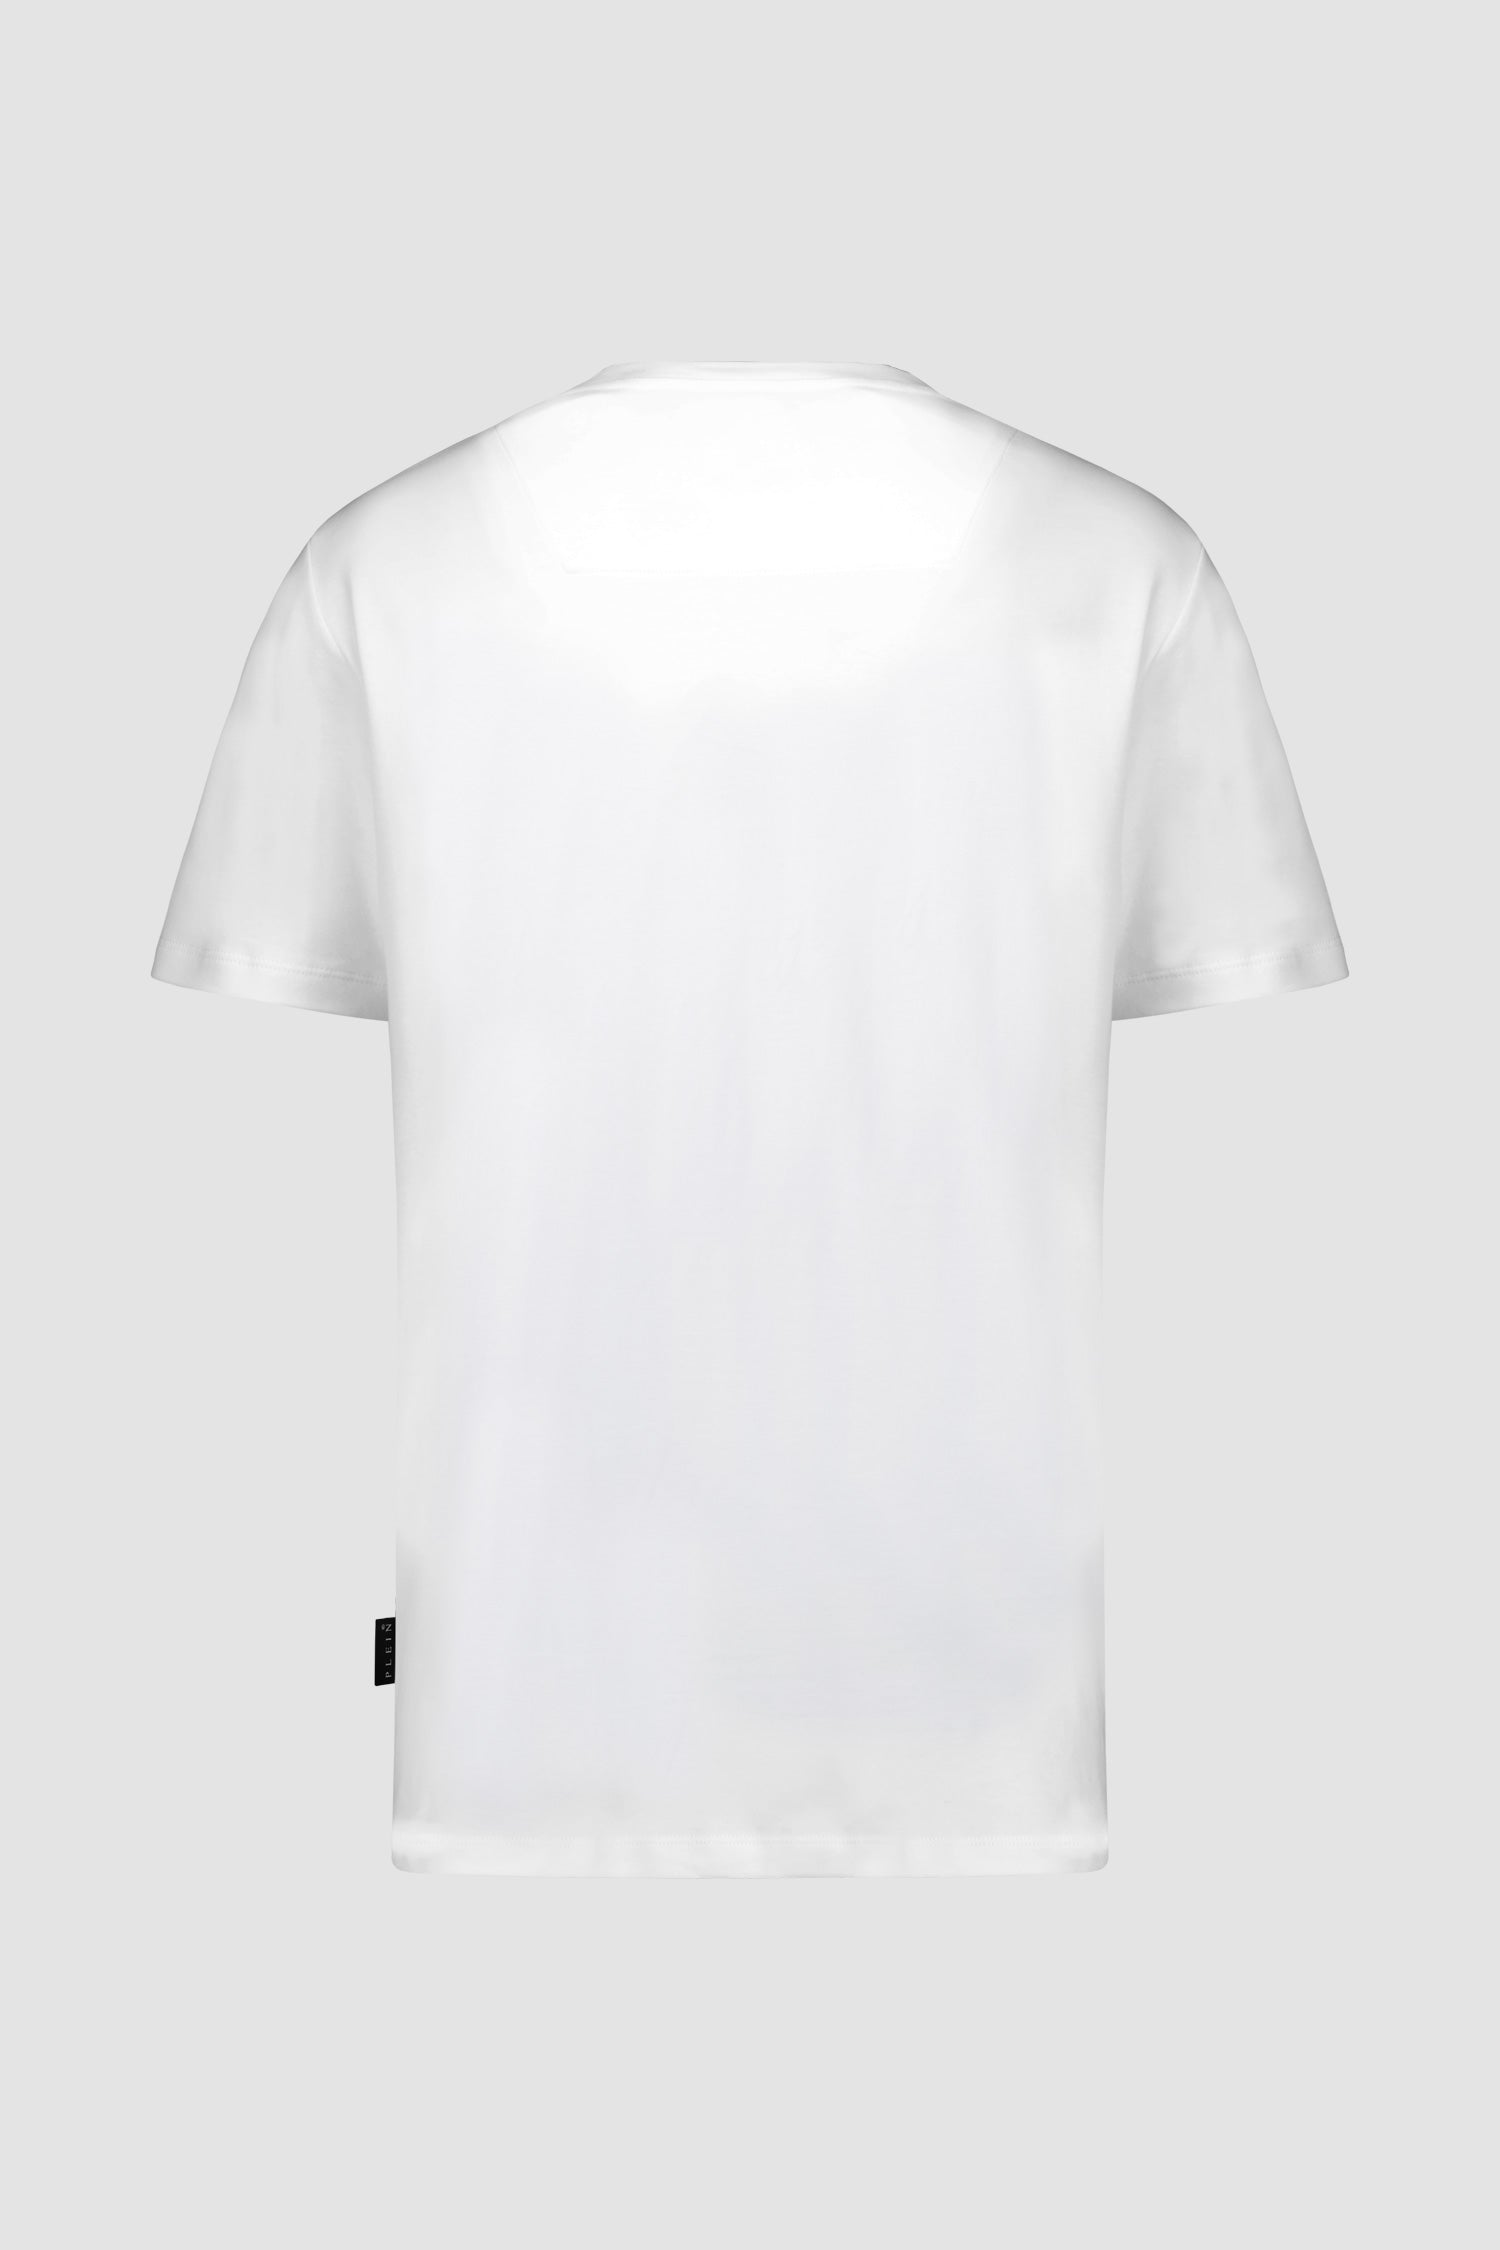 Philipp Plein Round Neck SS Basic T-Shirt